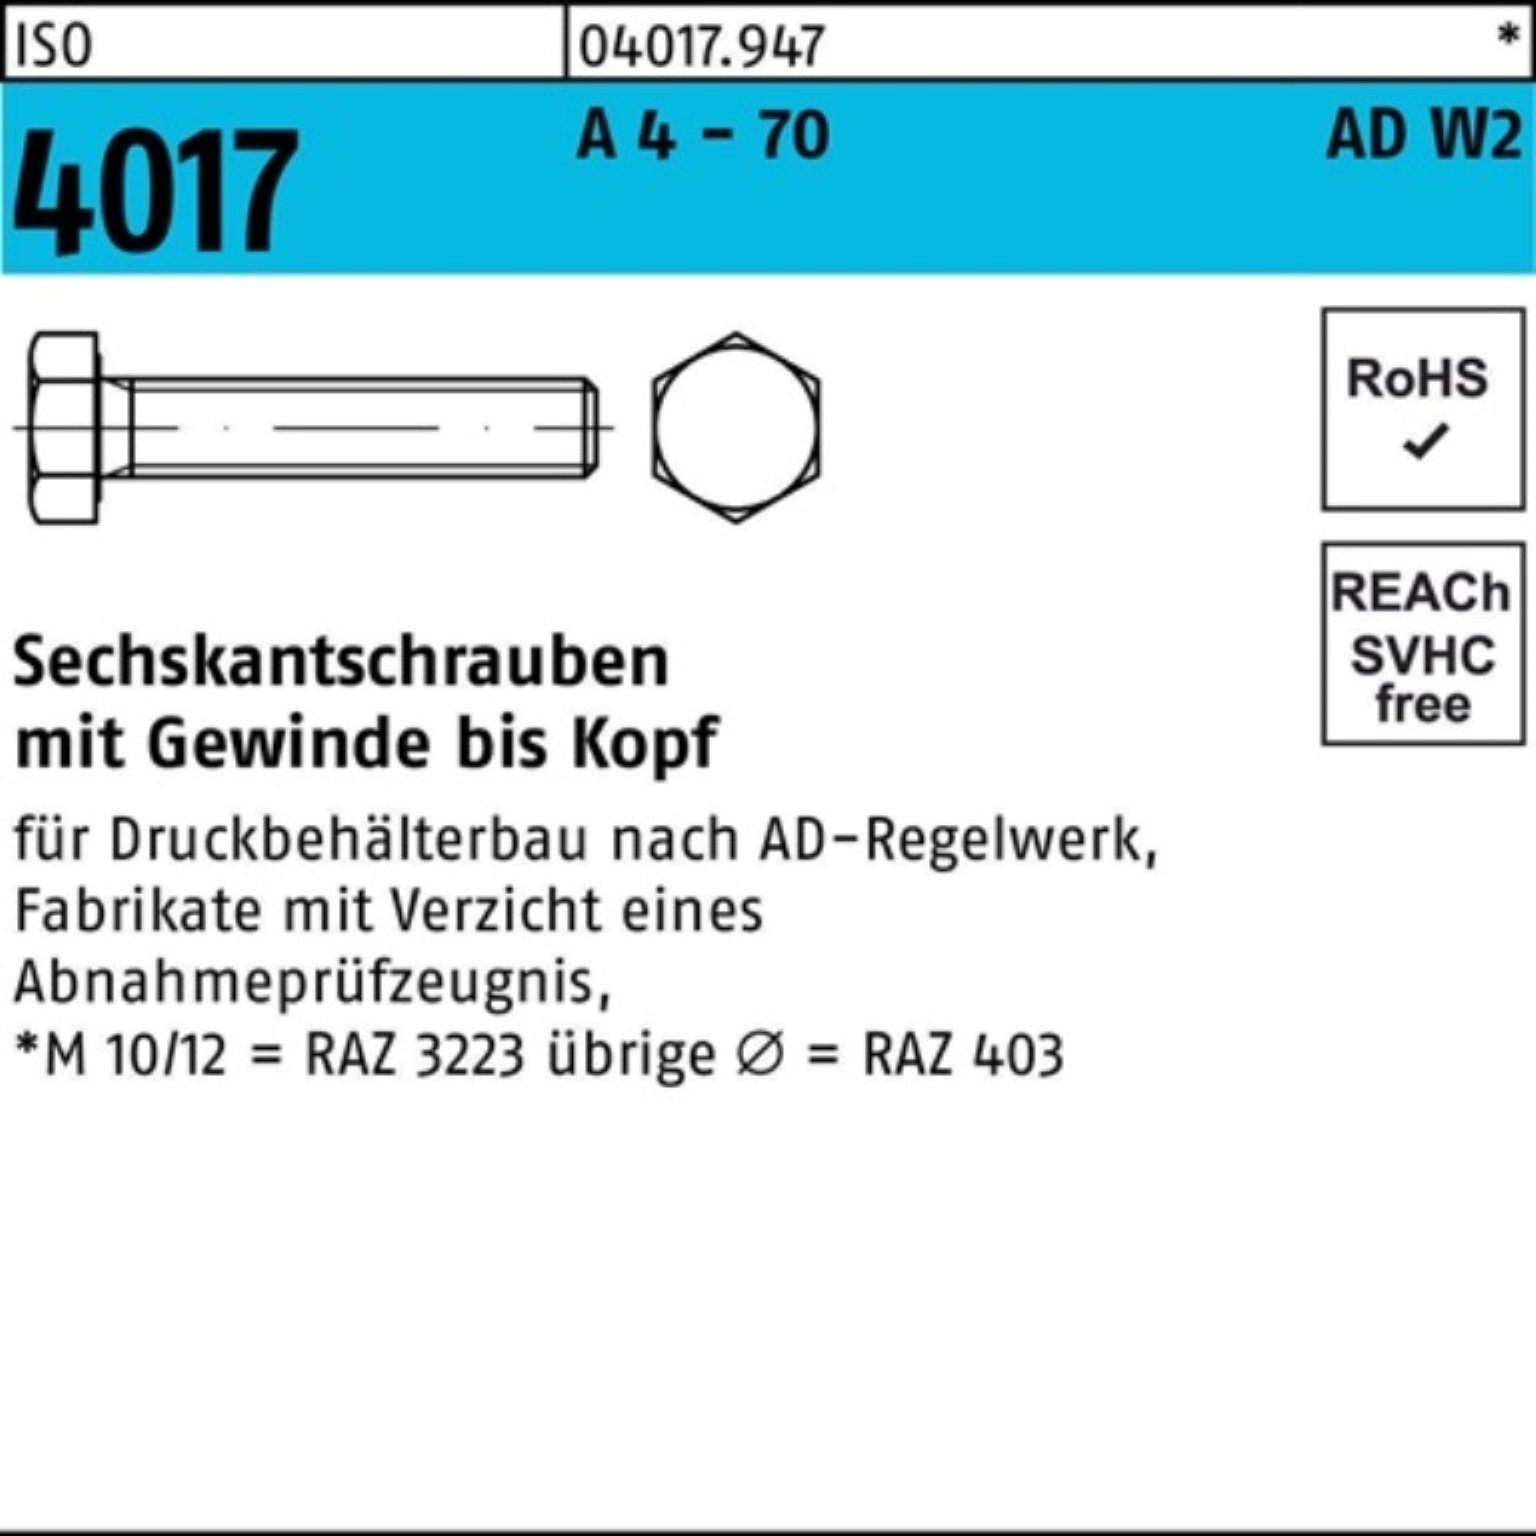 Bufab Sechskantschraube 100er Pack Sechskantschraube ISO 4017 VG M20x 70 A 4 - 70 AD-W2 25 St